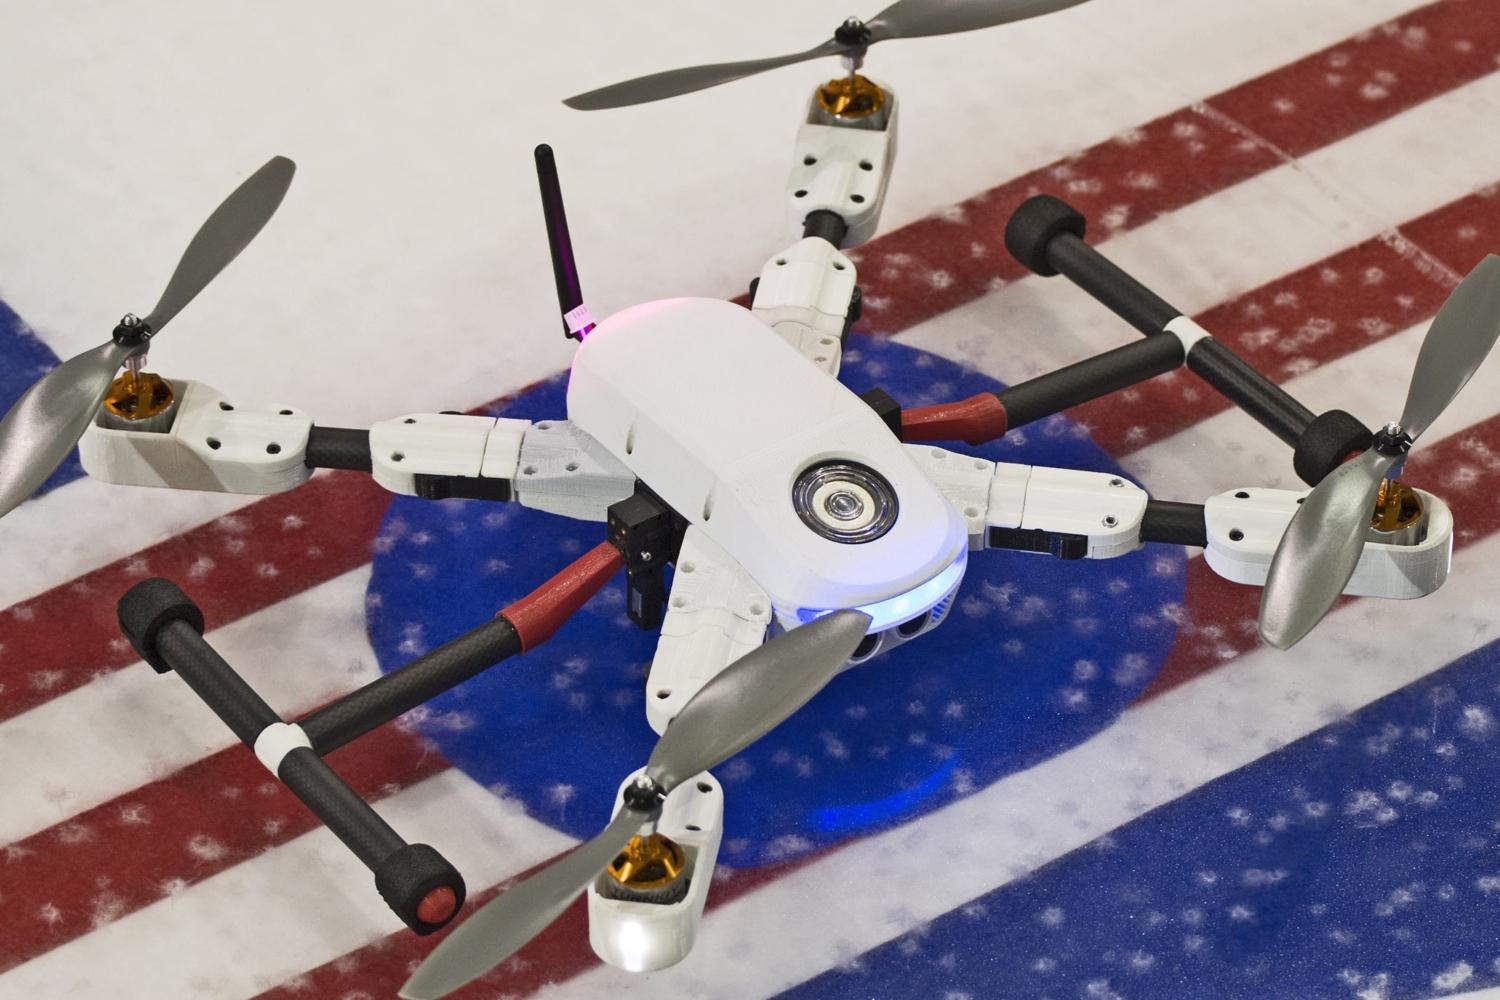 plexidrone camera drone disassembles neatly storage dreamqii 15